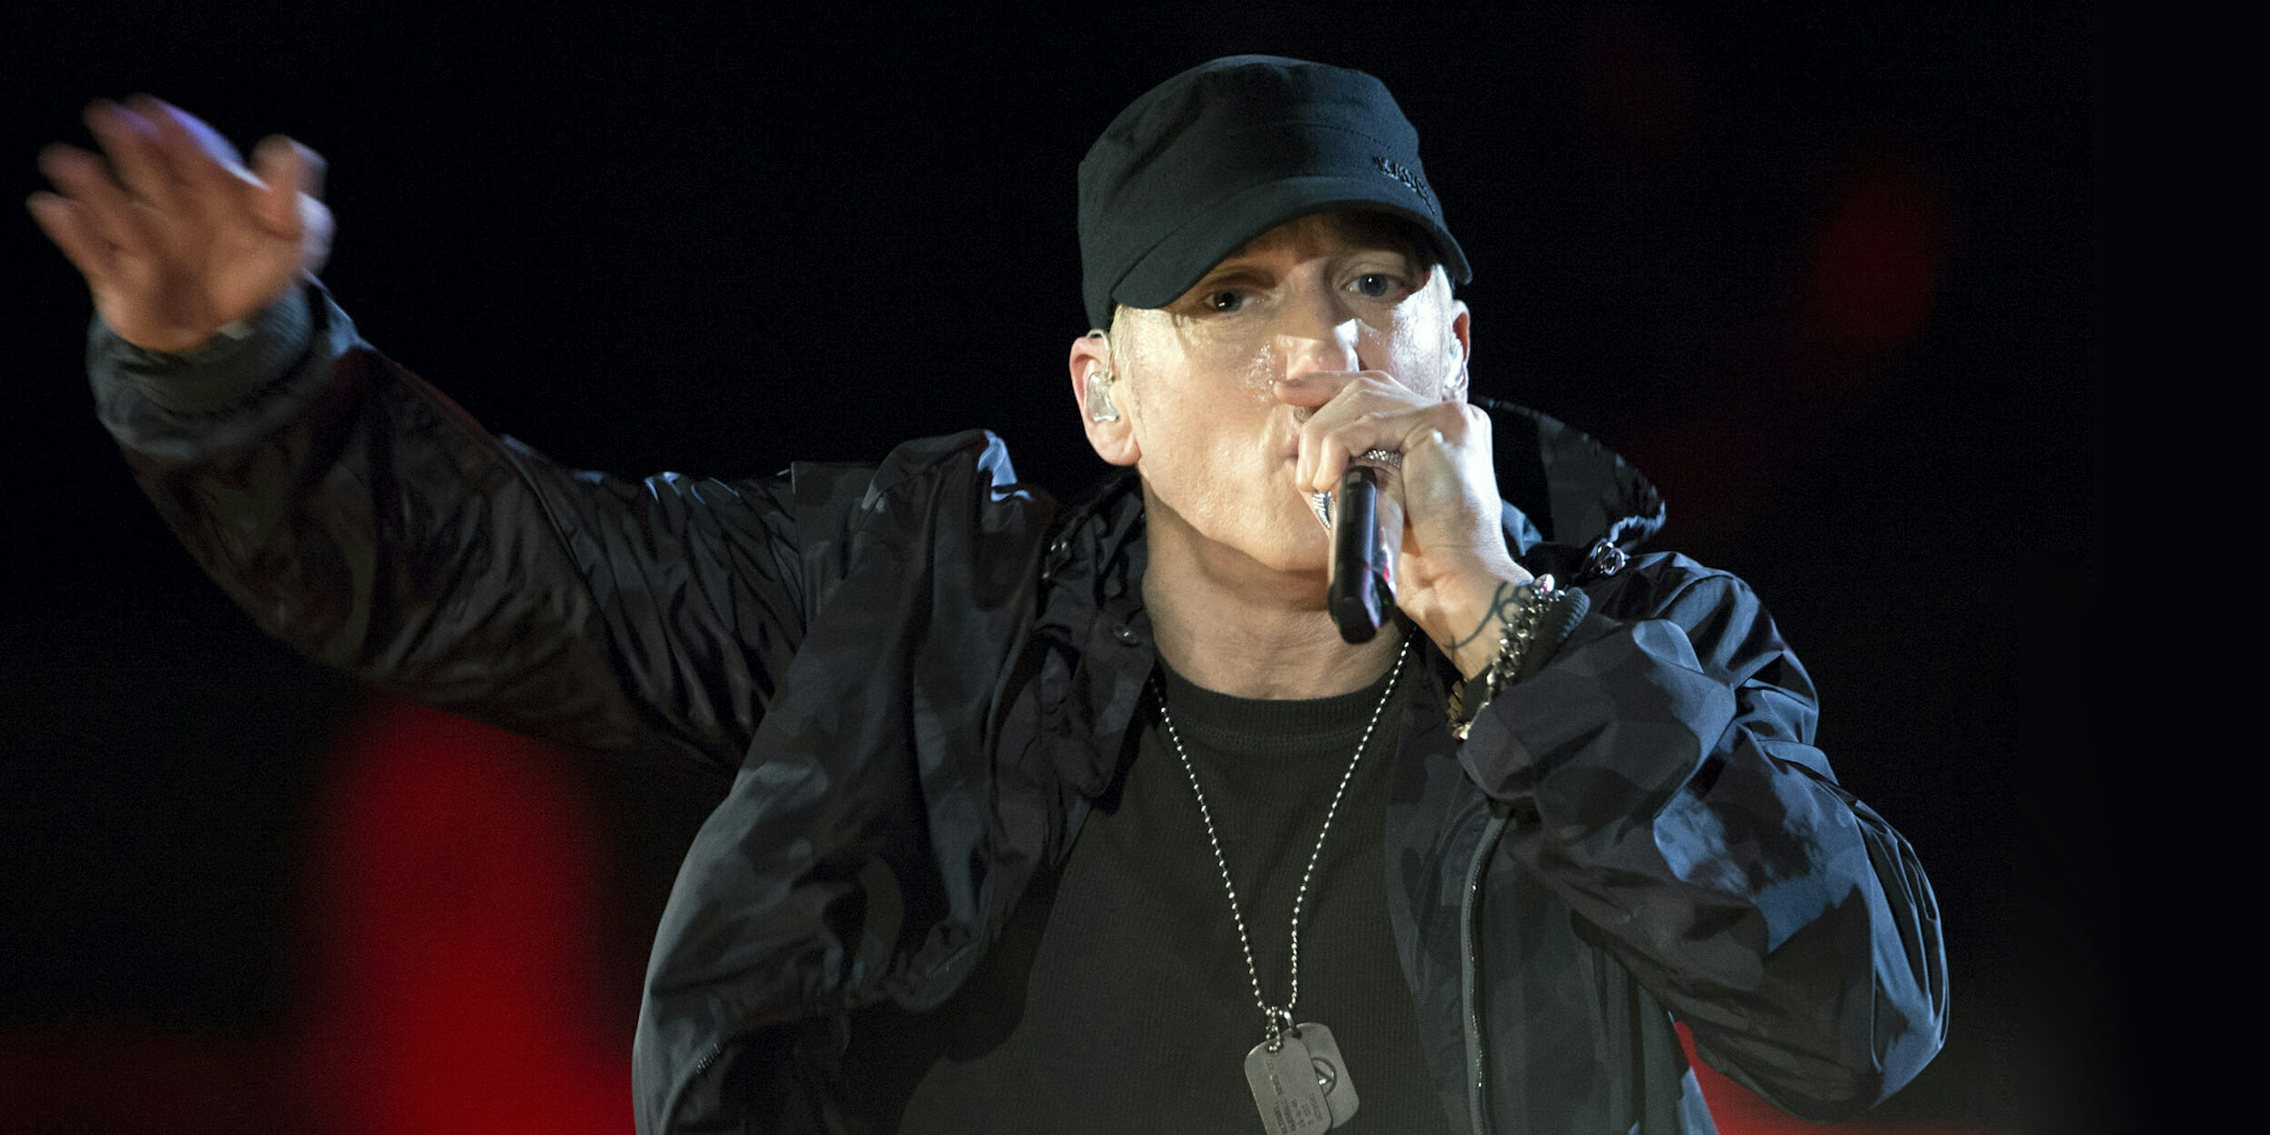 Eminem performs during The Concert for Valor in Washington, D.C.